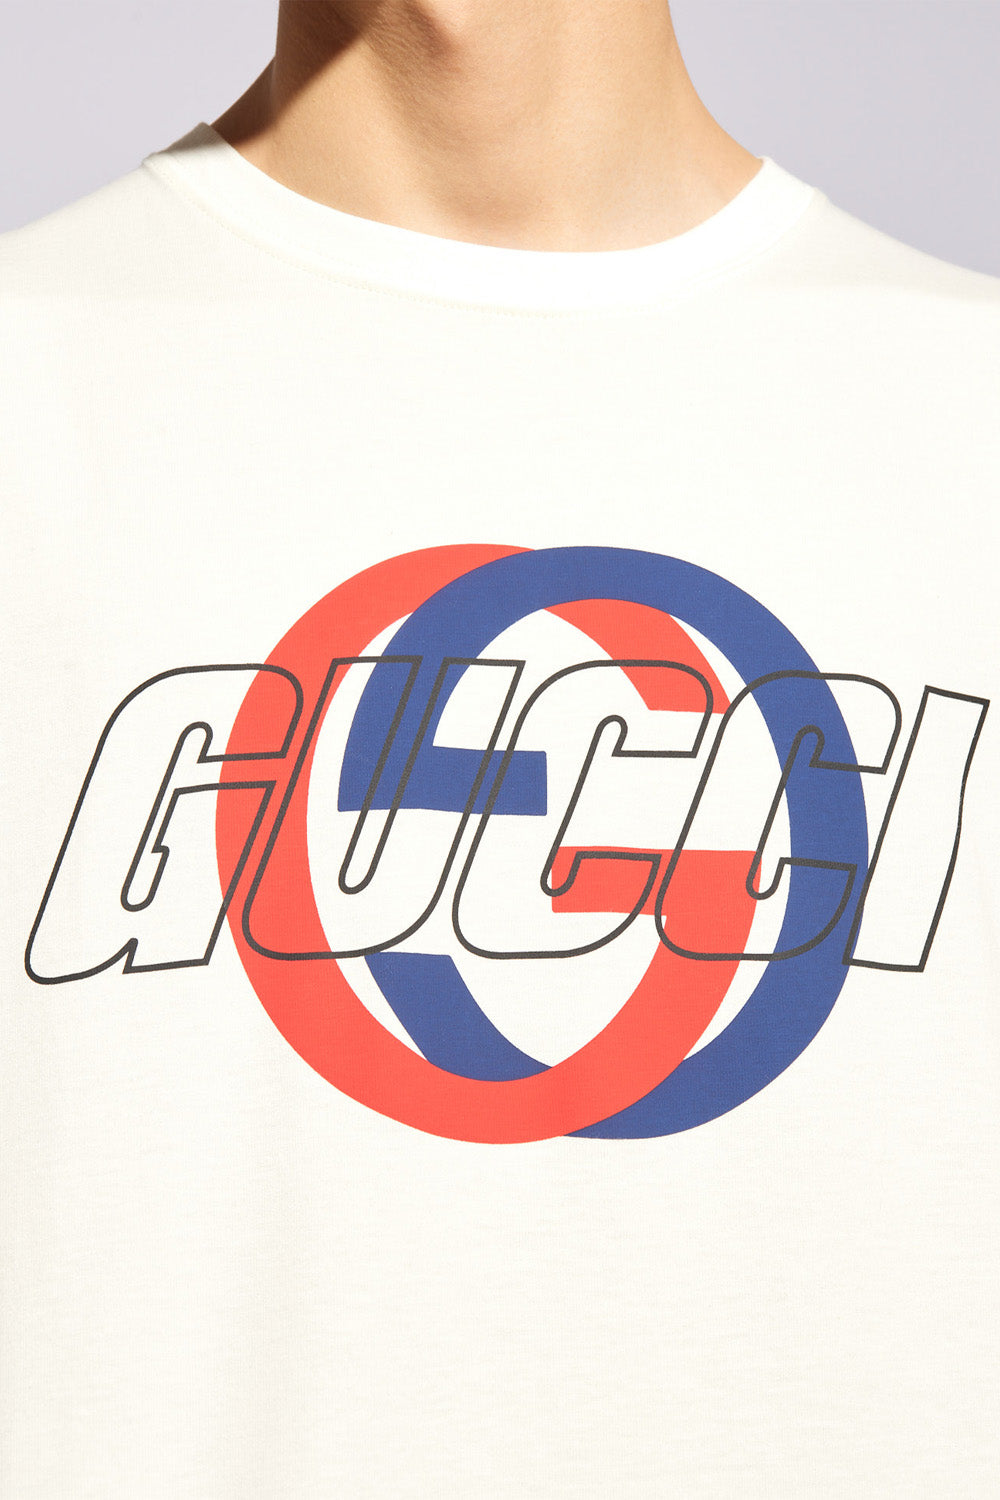 Gucci Cotton Jersey Printed T-Shirt